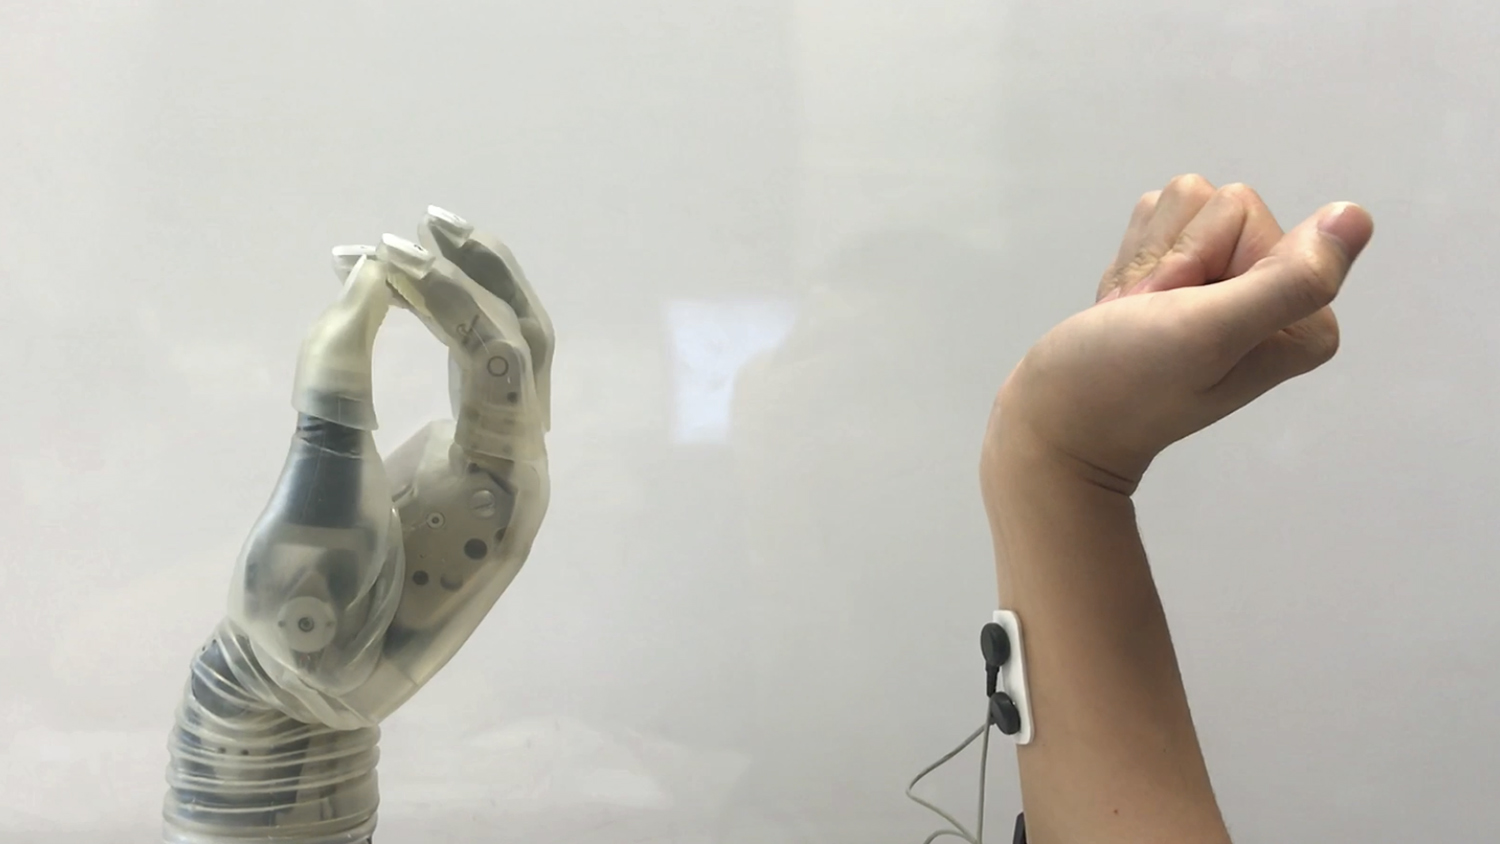 Prosthetic hand mimics real hand movement